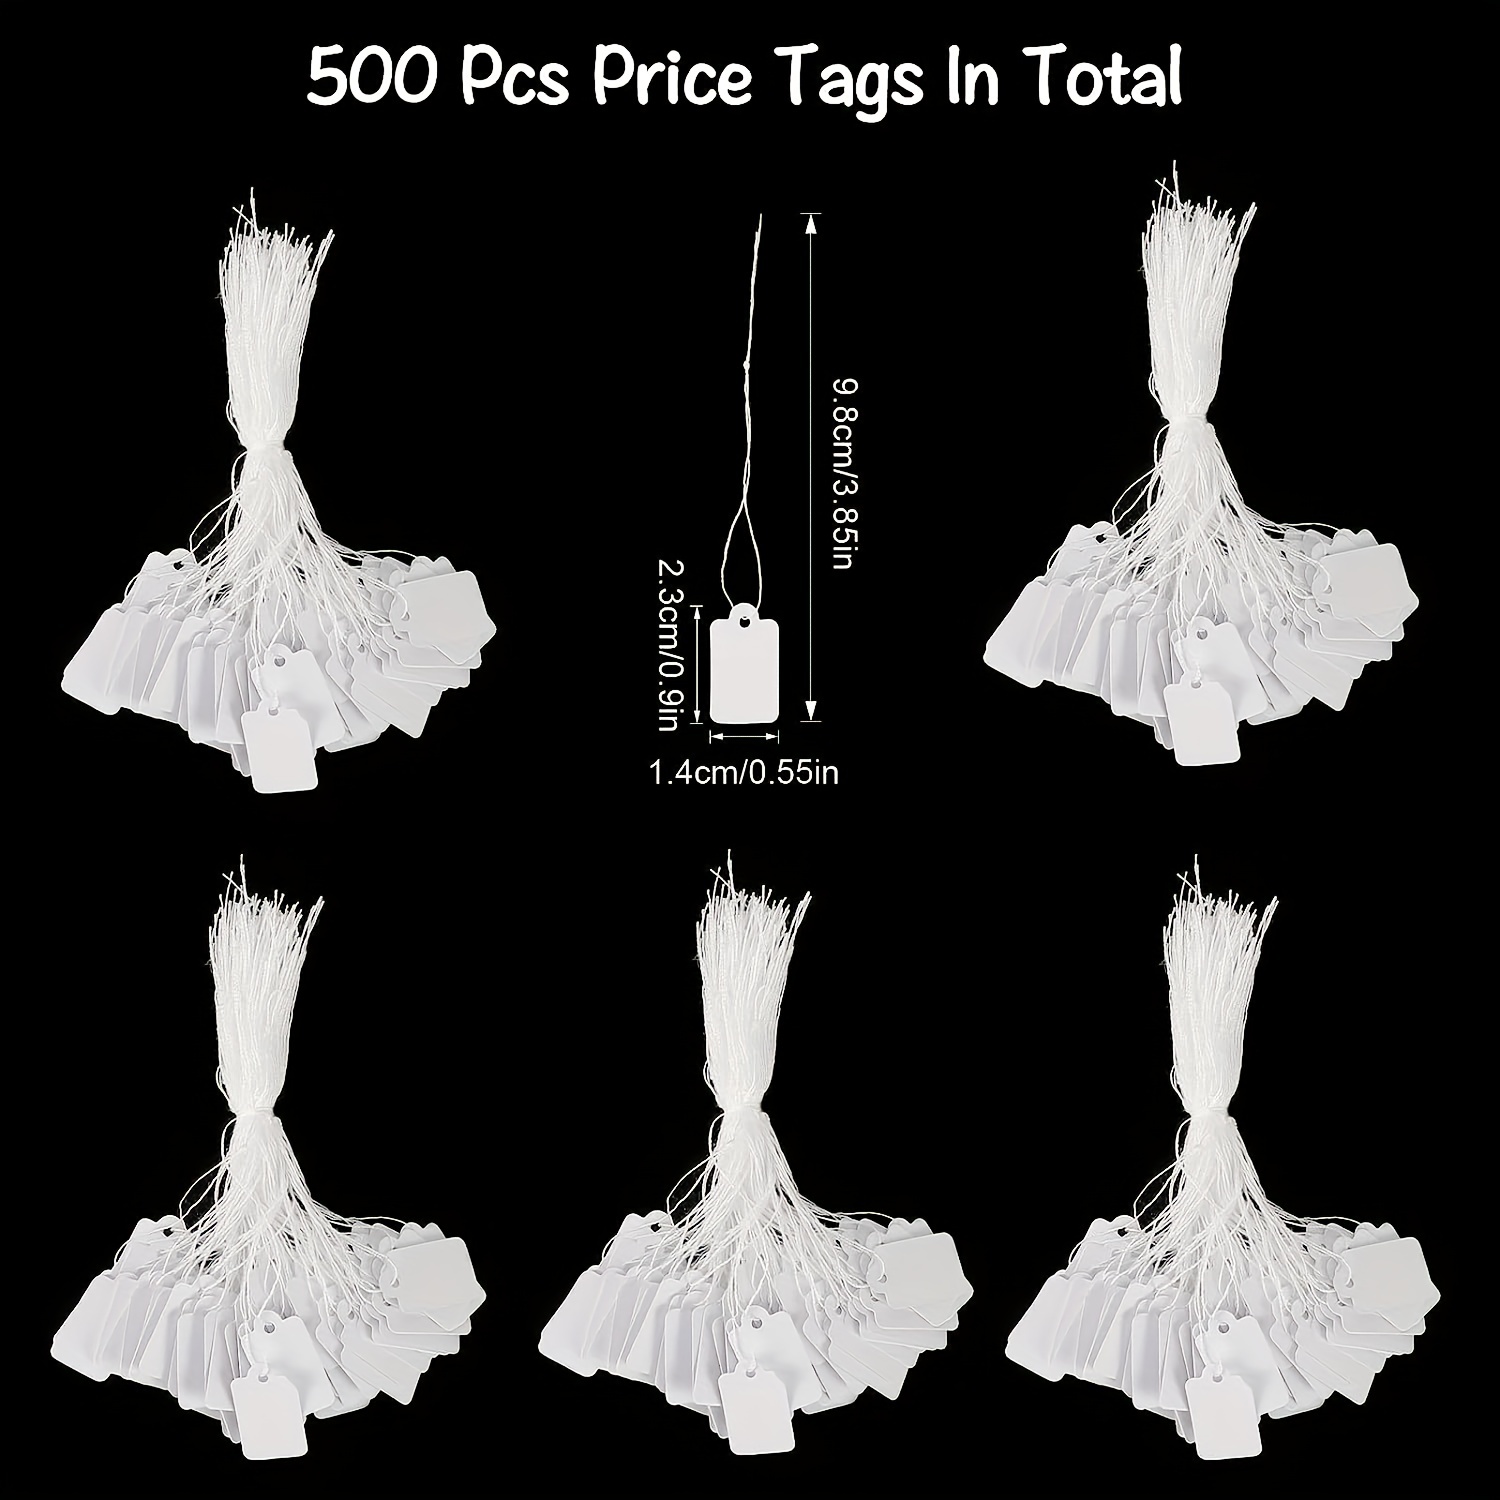 500pcs Paper Price Tags - Mini Size Labels Tag DIY Jewelry Display  Accessories